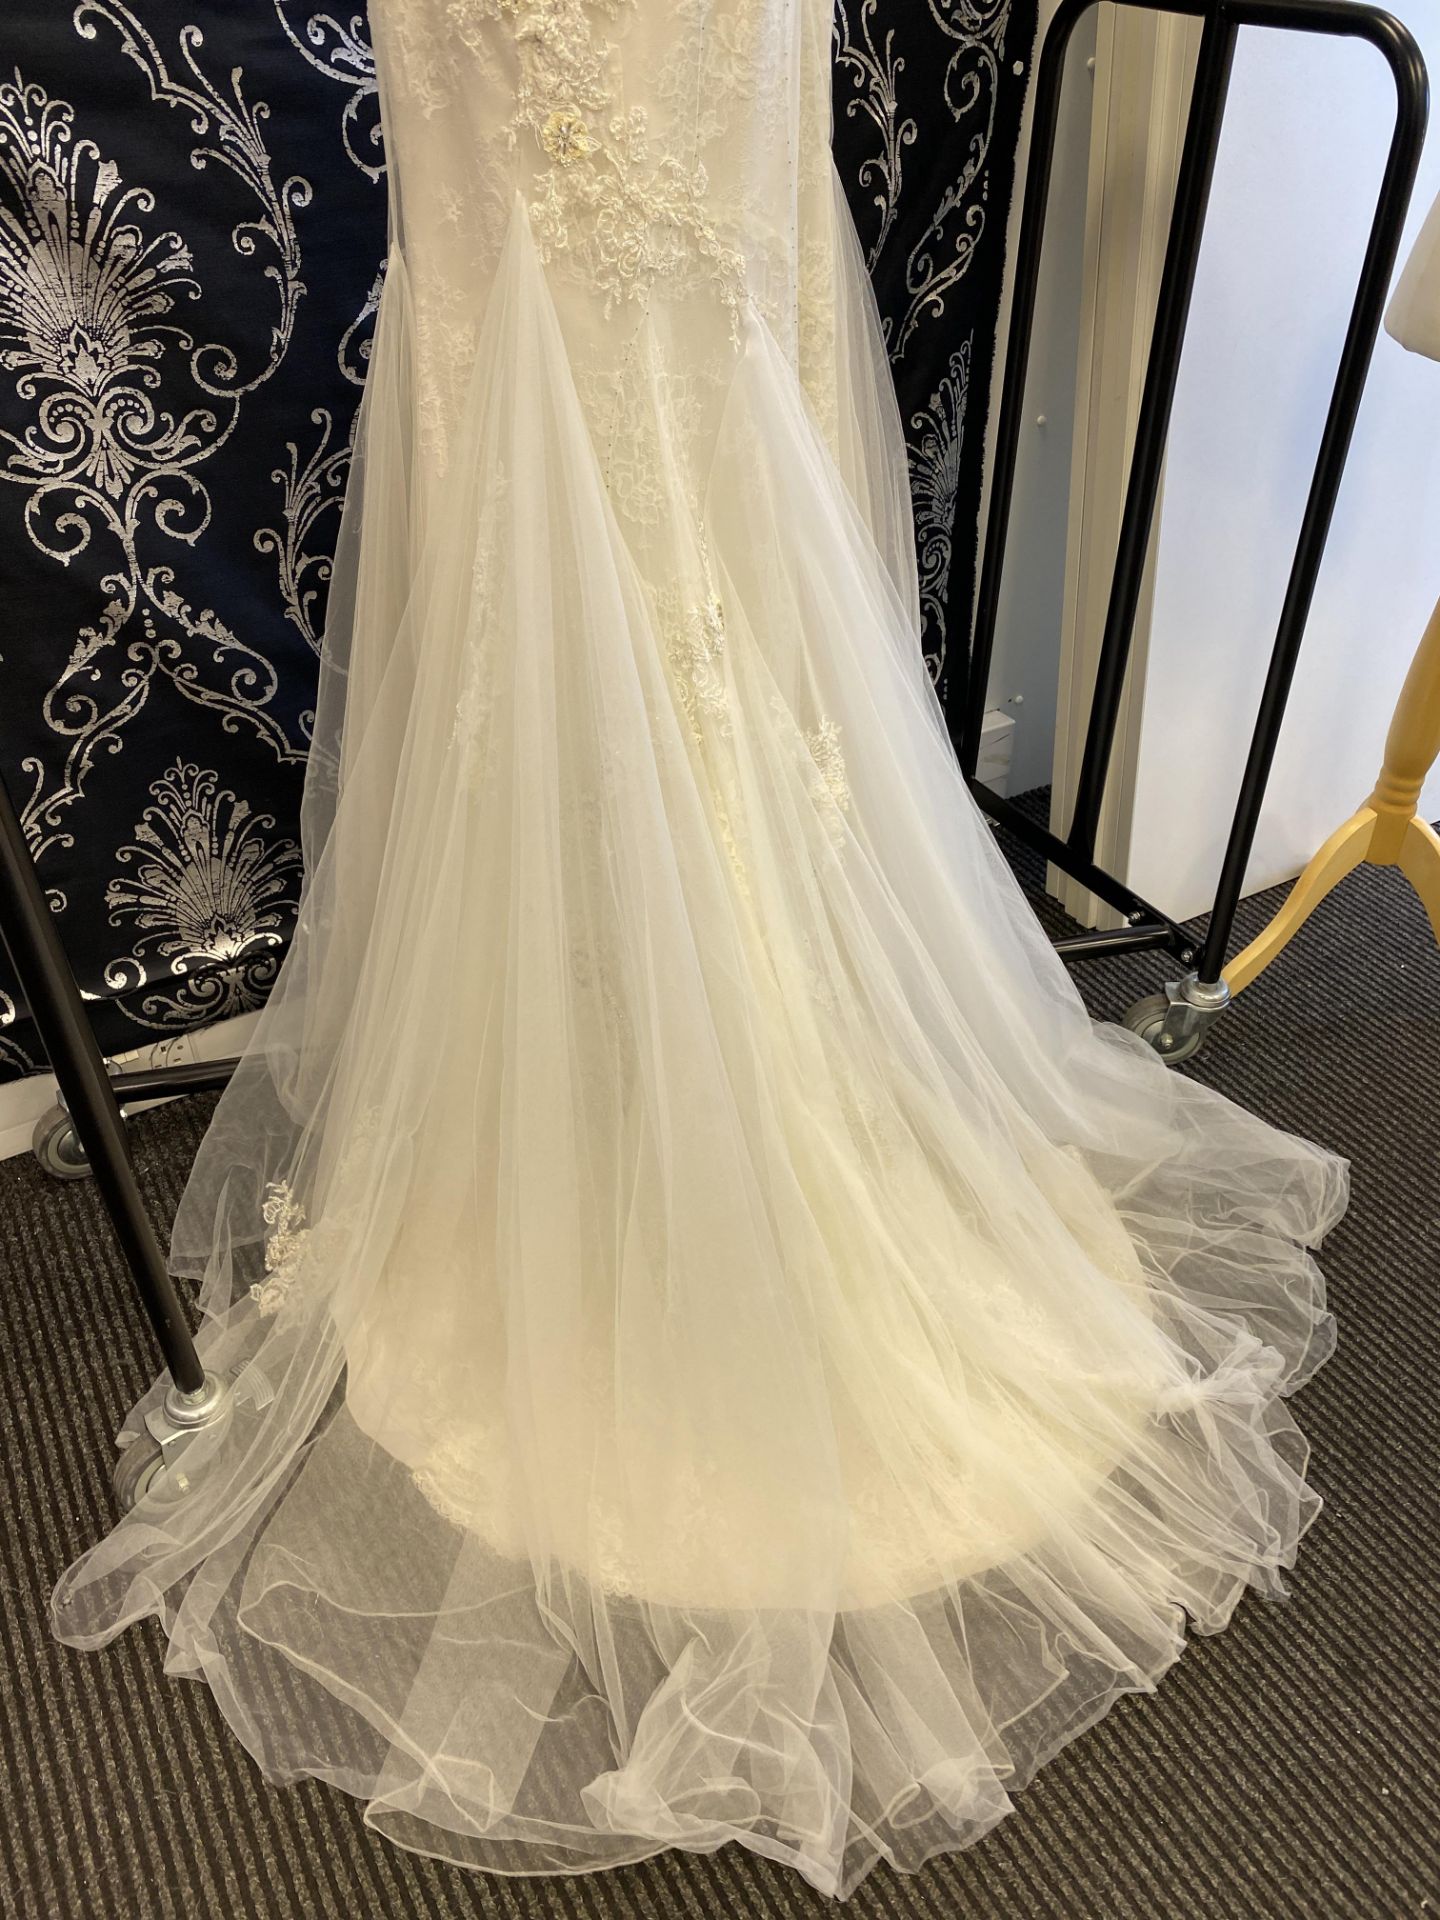 1 x LUSAN MANDONGUS Elegant Strapless Lace & Chiffon Fishtail Designer Wedding Dress RRP £1,950 UK12 - Image 9 of 9